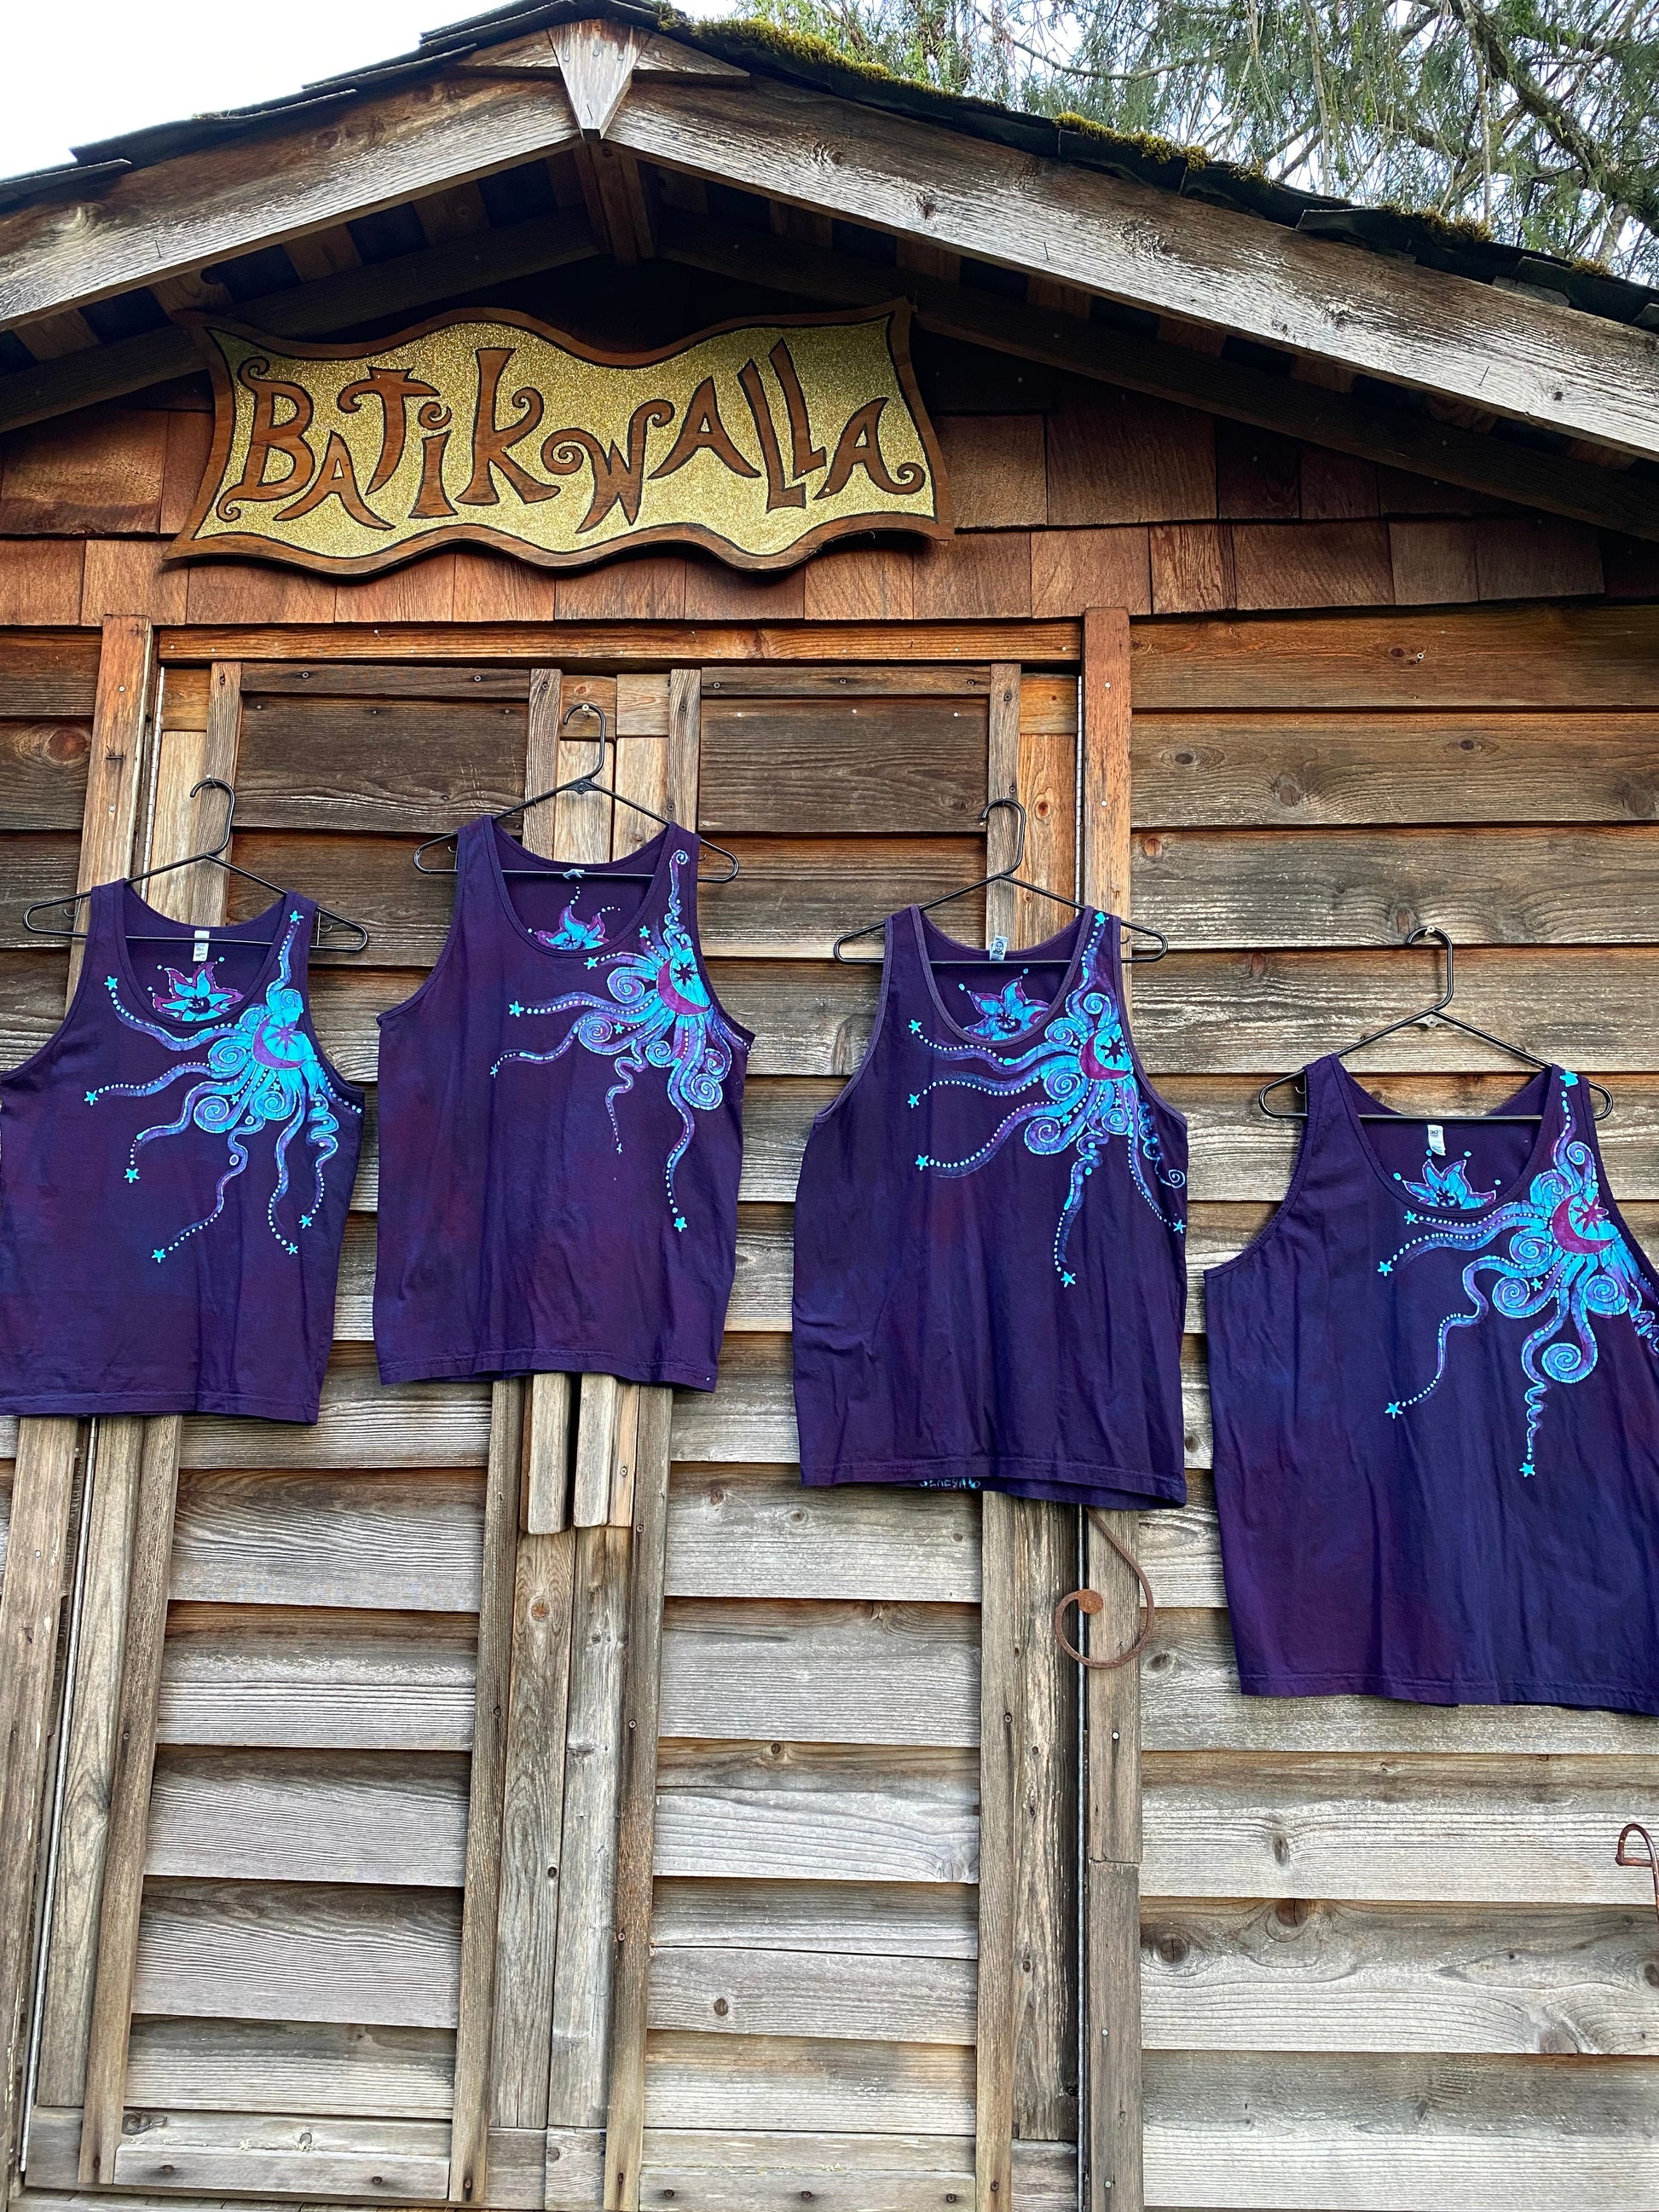 Midnight Purple and Turquoise Moonbeams Tank Top Tops batikwalla 